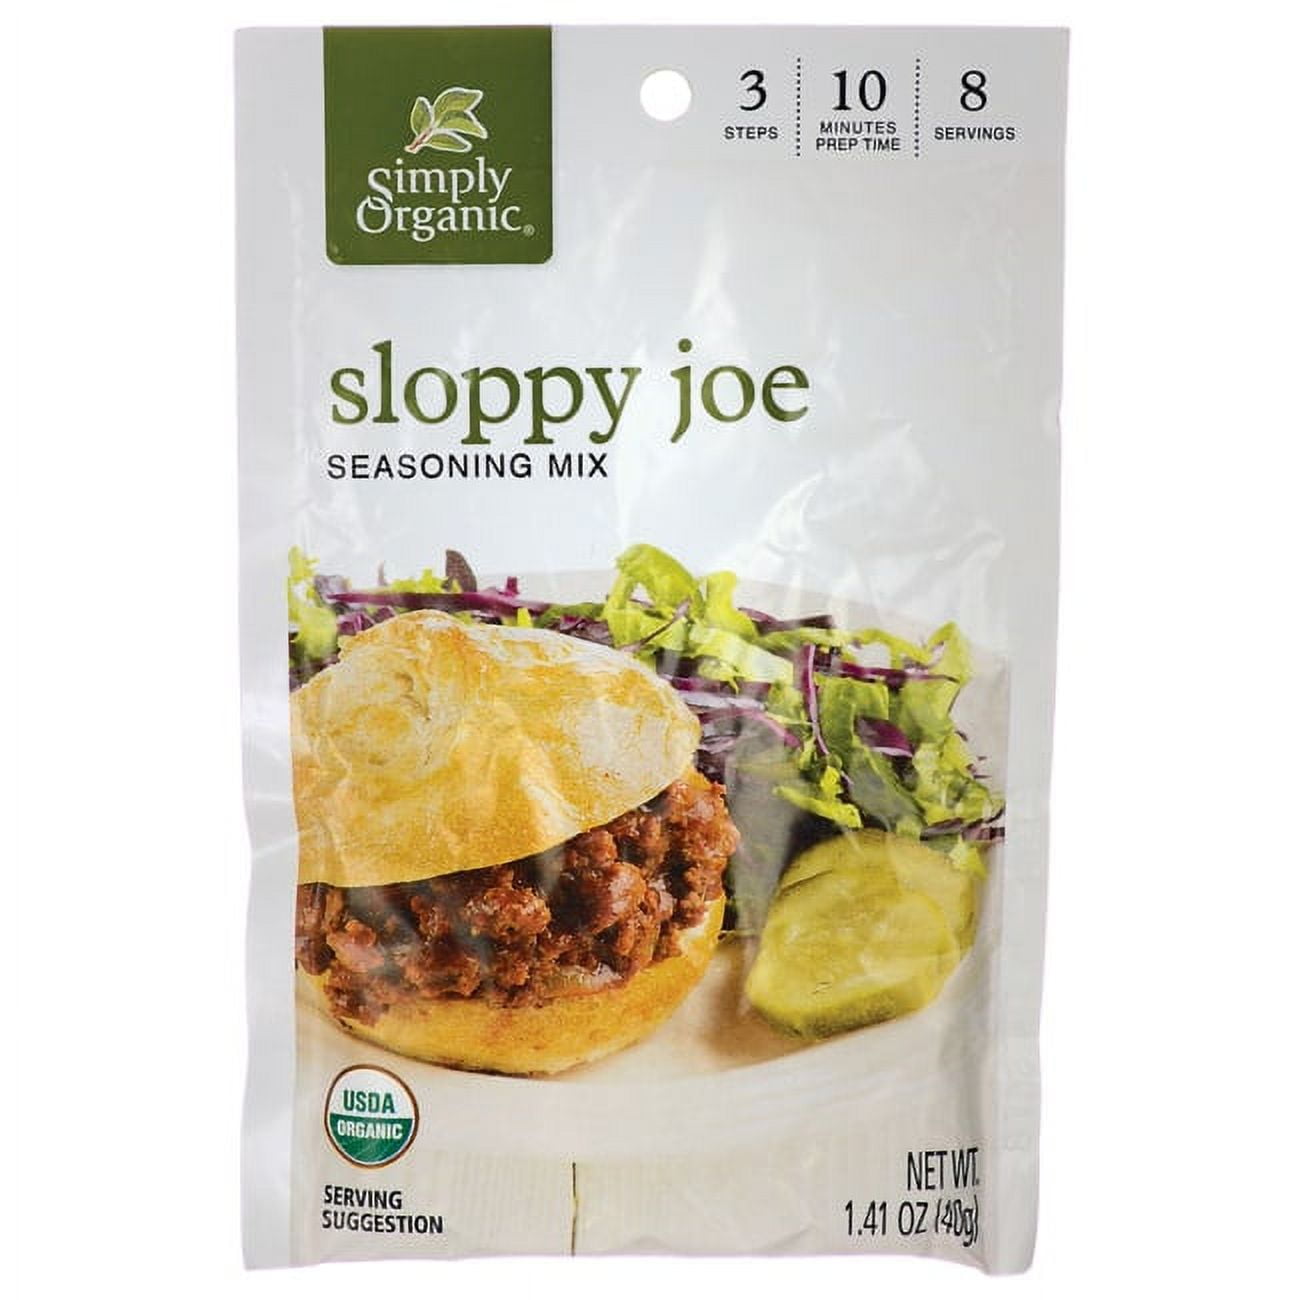 Lawry's Sloppy Joe Seasoning Mix